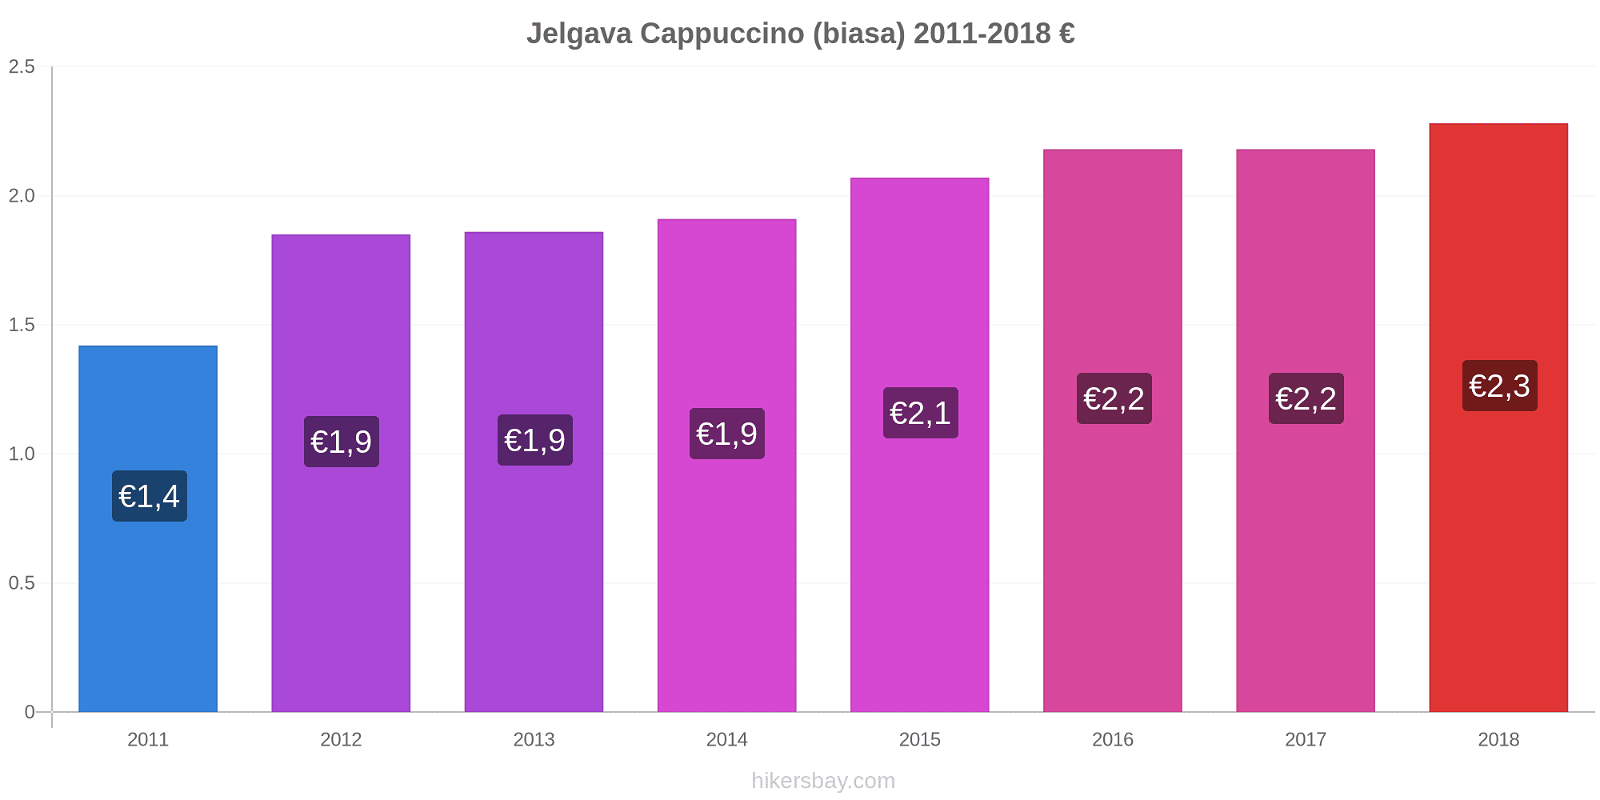 Jelgava perubahan harga Cappuccino (biasa) hikersbay.com